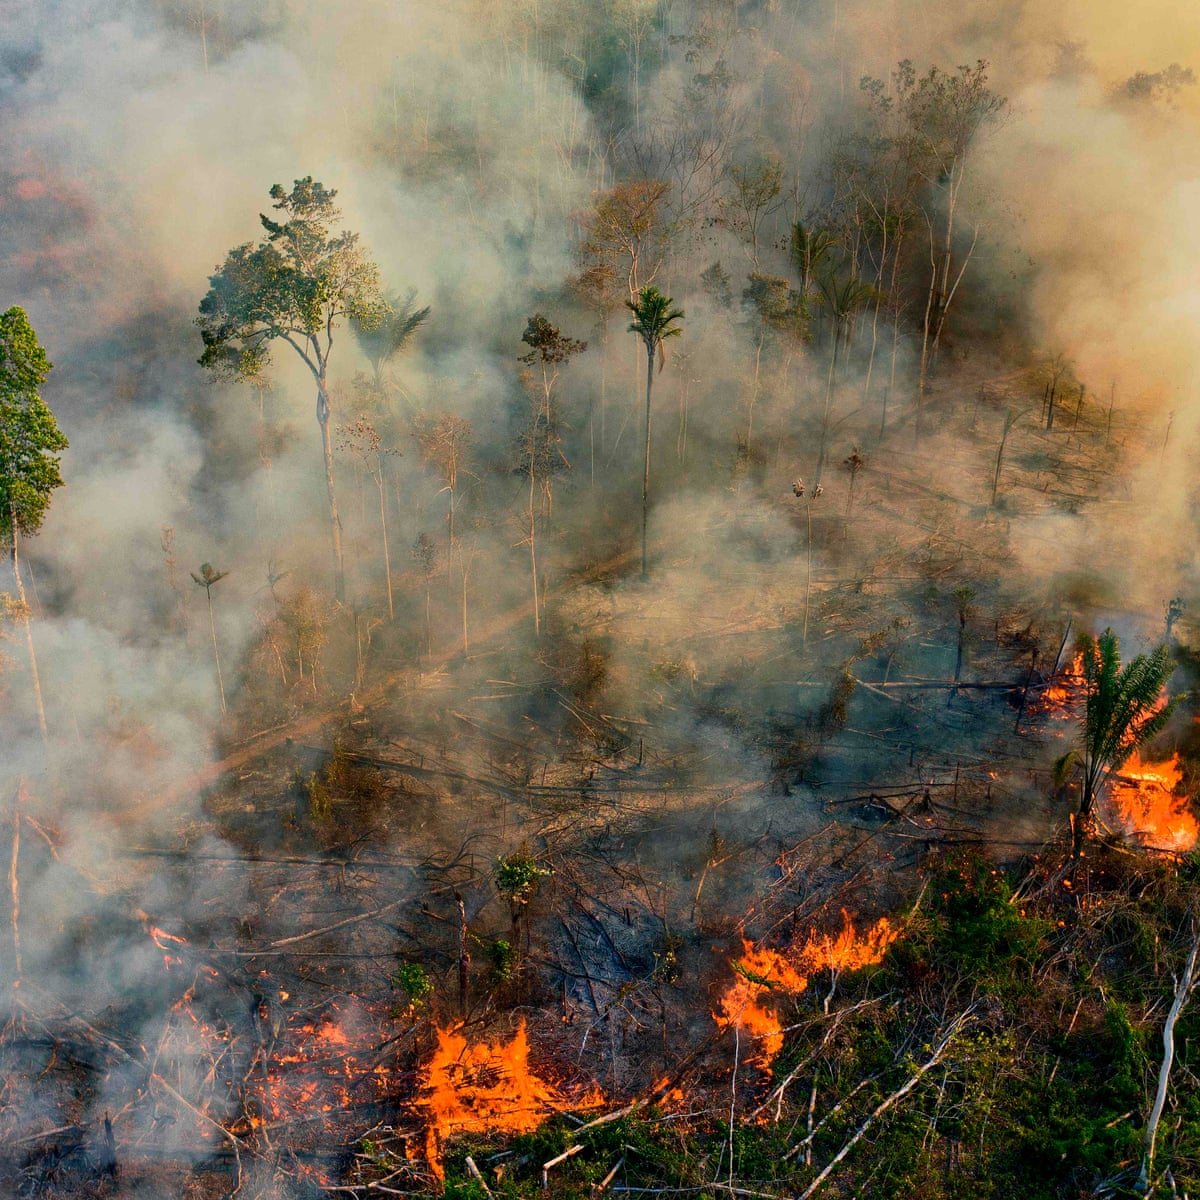 Brazil S Amazon Rainforest Suffers Worst Fires In A Decade Amazon Rainforest The Guardian